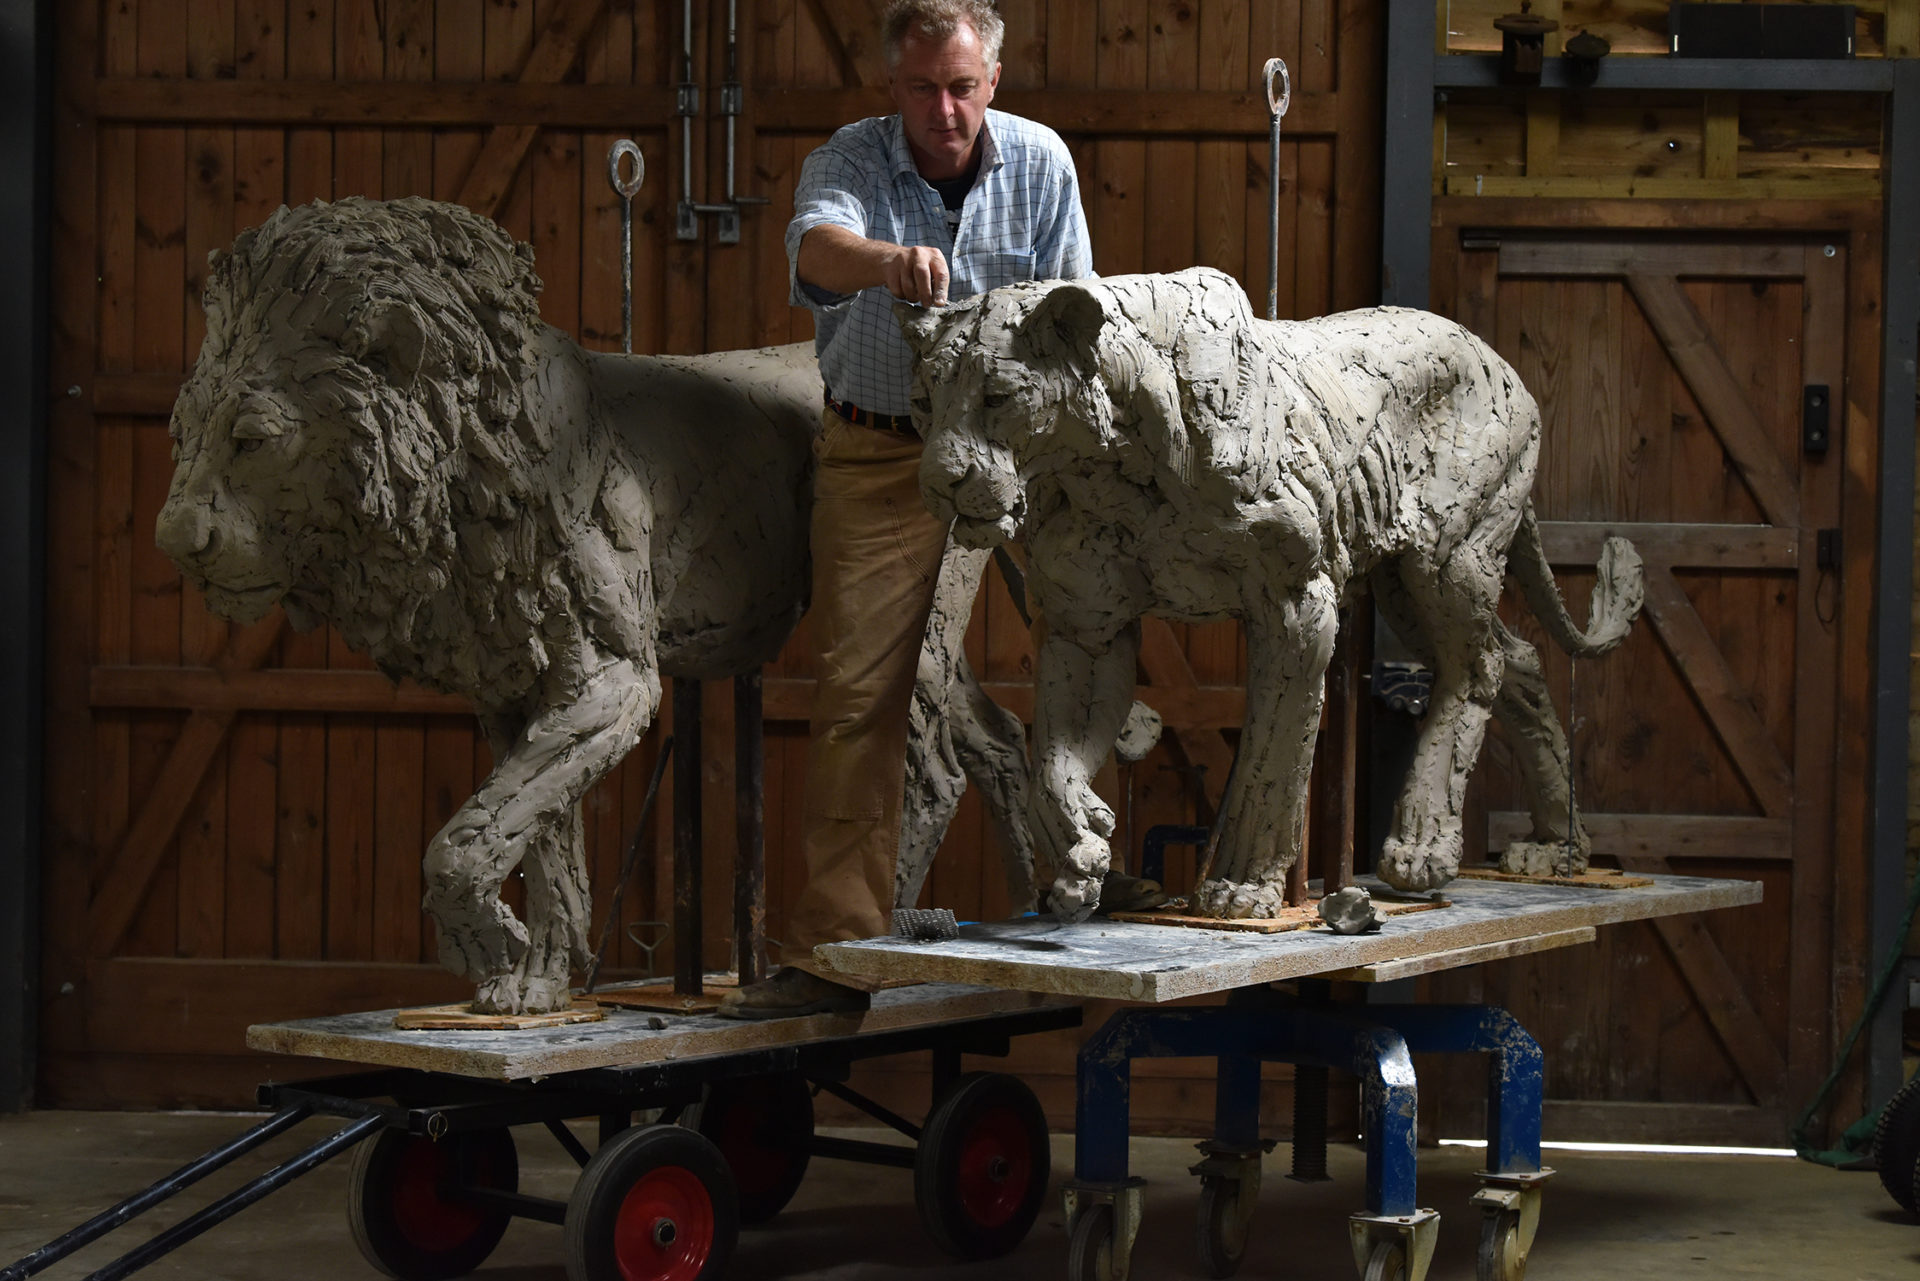 Hamish making lion sculptures